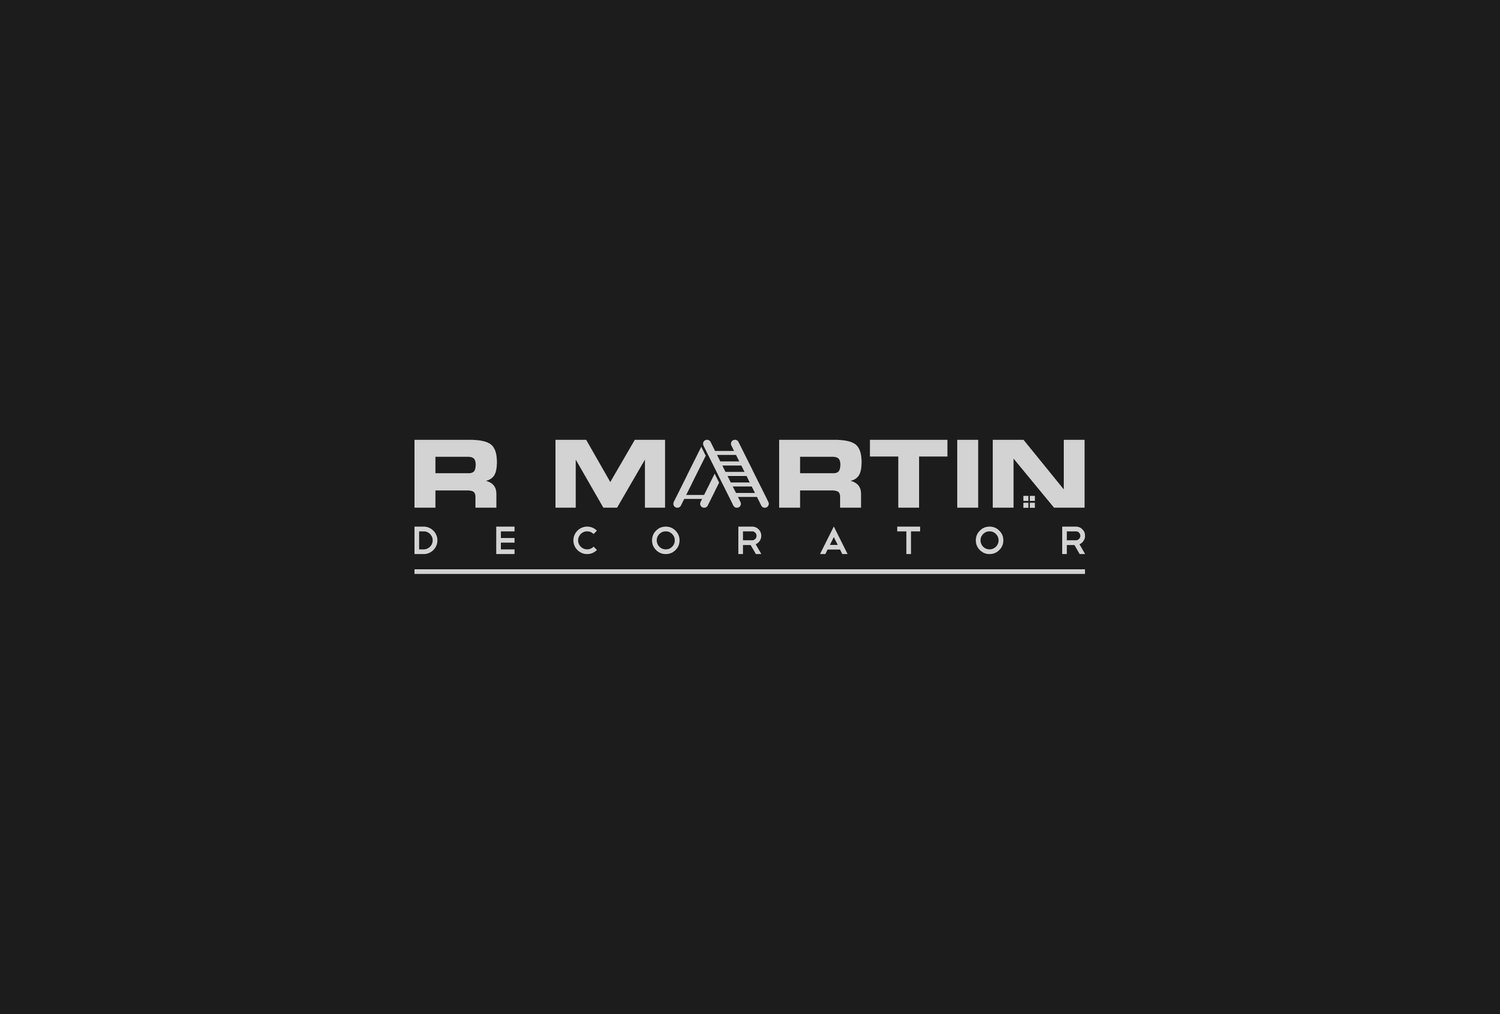 R. Martin, Decorator